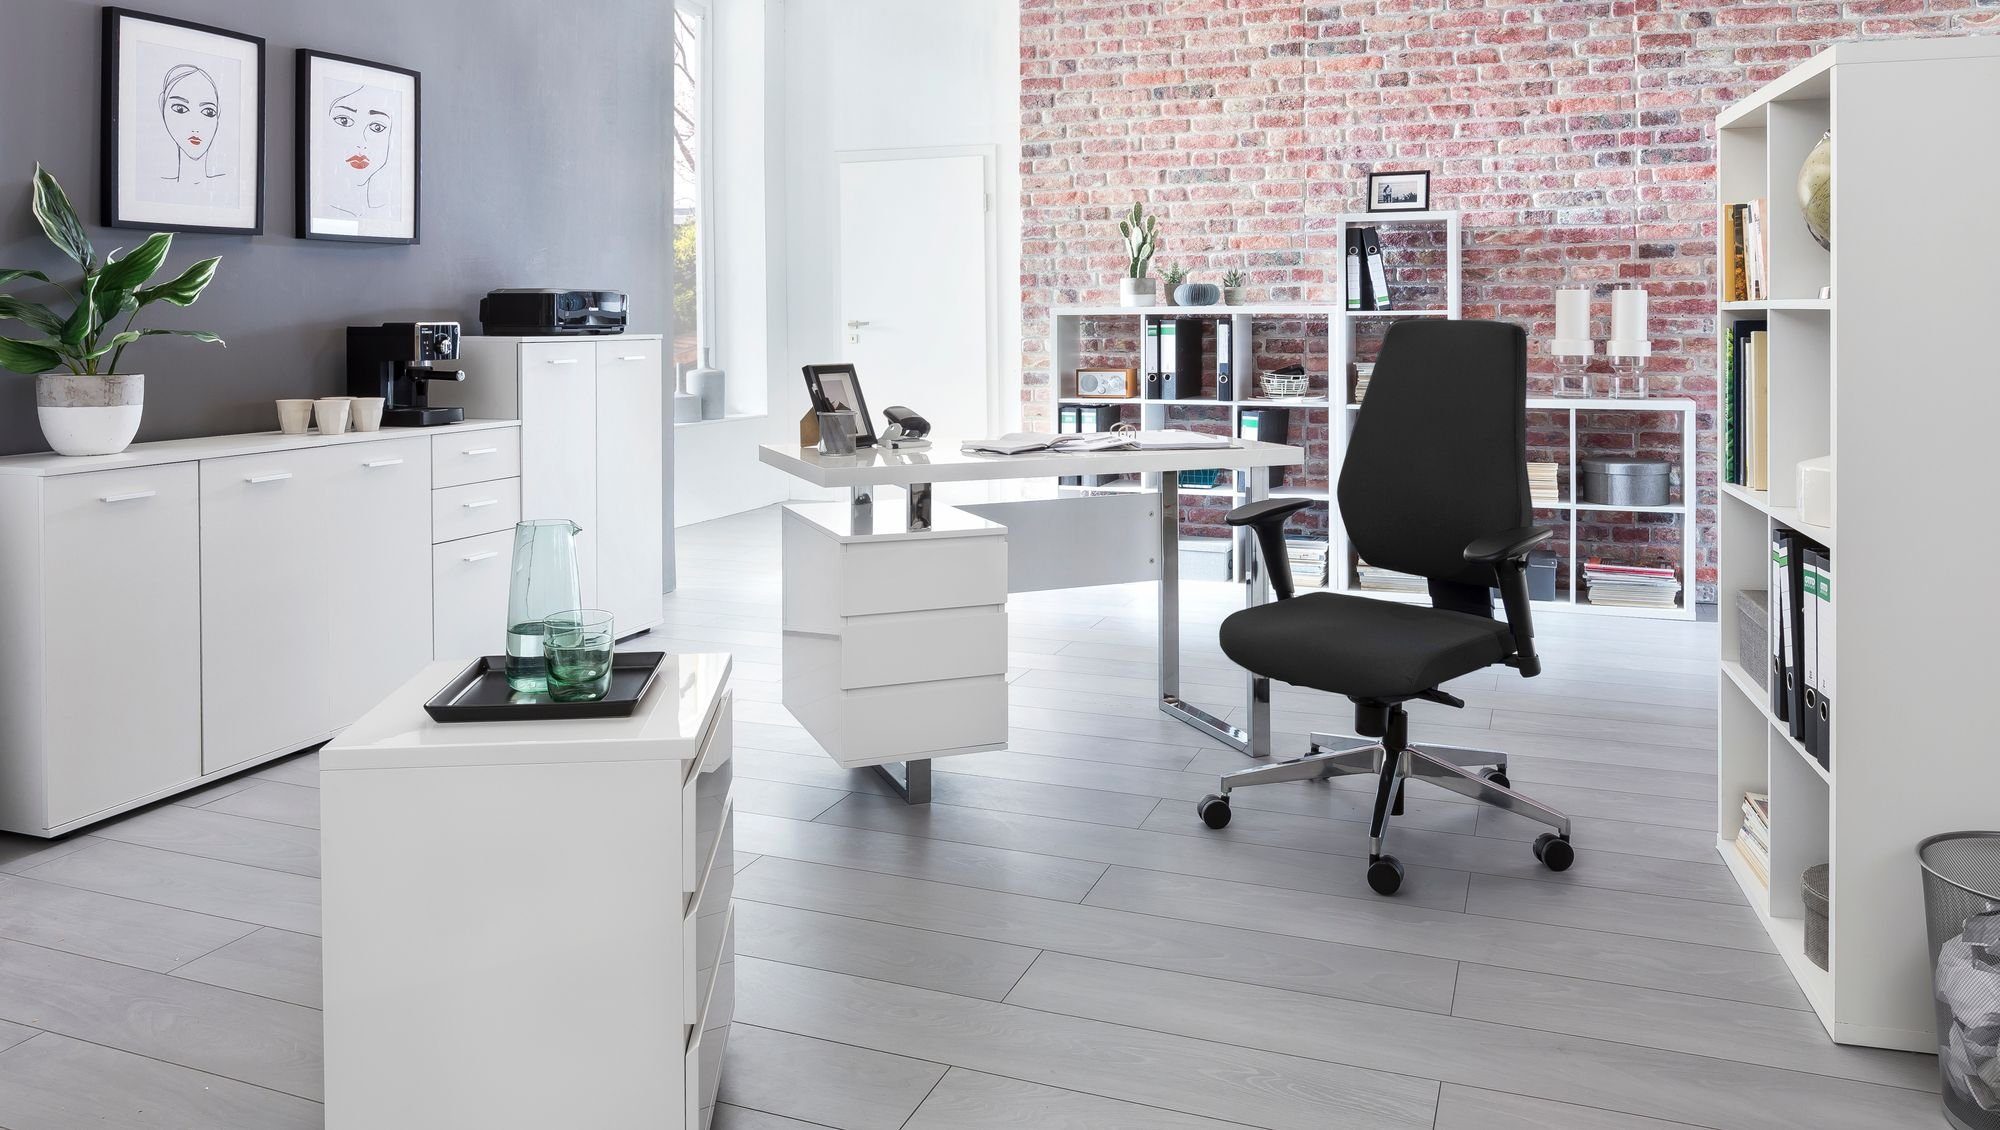 DESIGN Lendenwirbelstütze ergonomischer Komfortsitz Arbeitssessel, mit KADIMA Bürostuhl